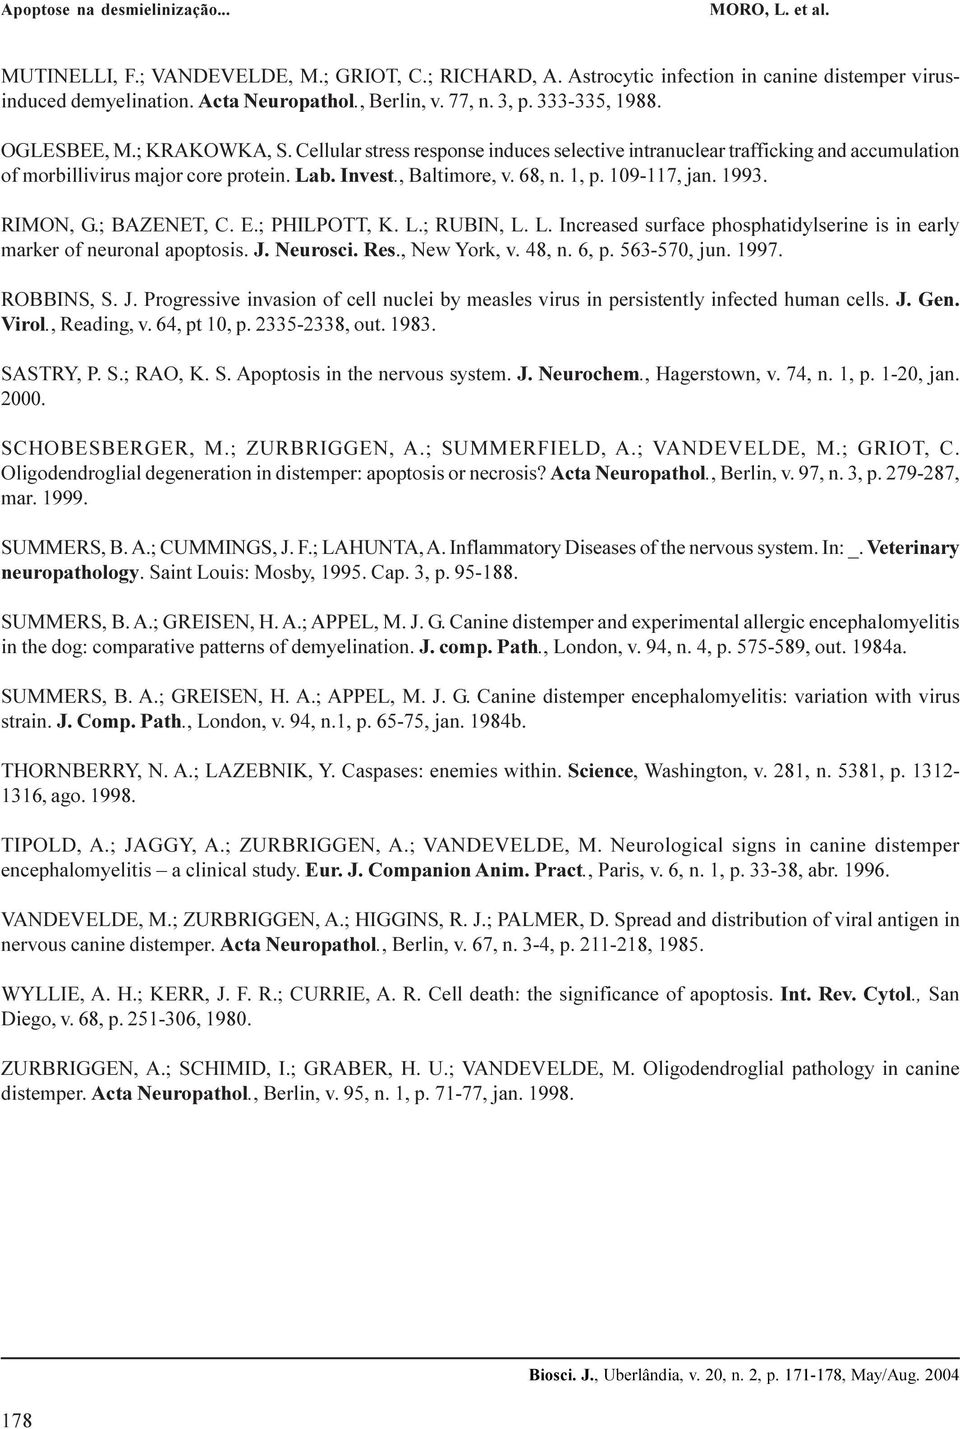 RIMON, G.; BAZENET, C. E.; PHILPOTT, K. L.; RUBIN, L. L. Increased surface phosphatidylserine is in early marker of neuronal apoptosis. J. Neurosci. Res., New York, v. 48, n. 6, p. 563-570, jun. 1997.